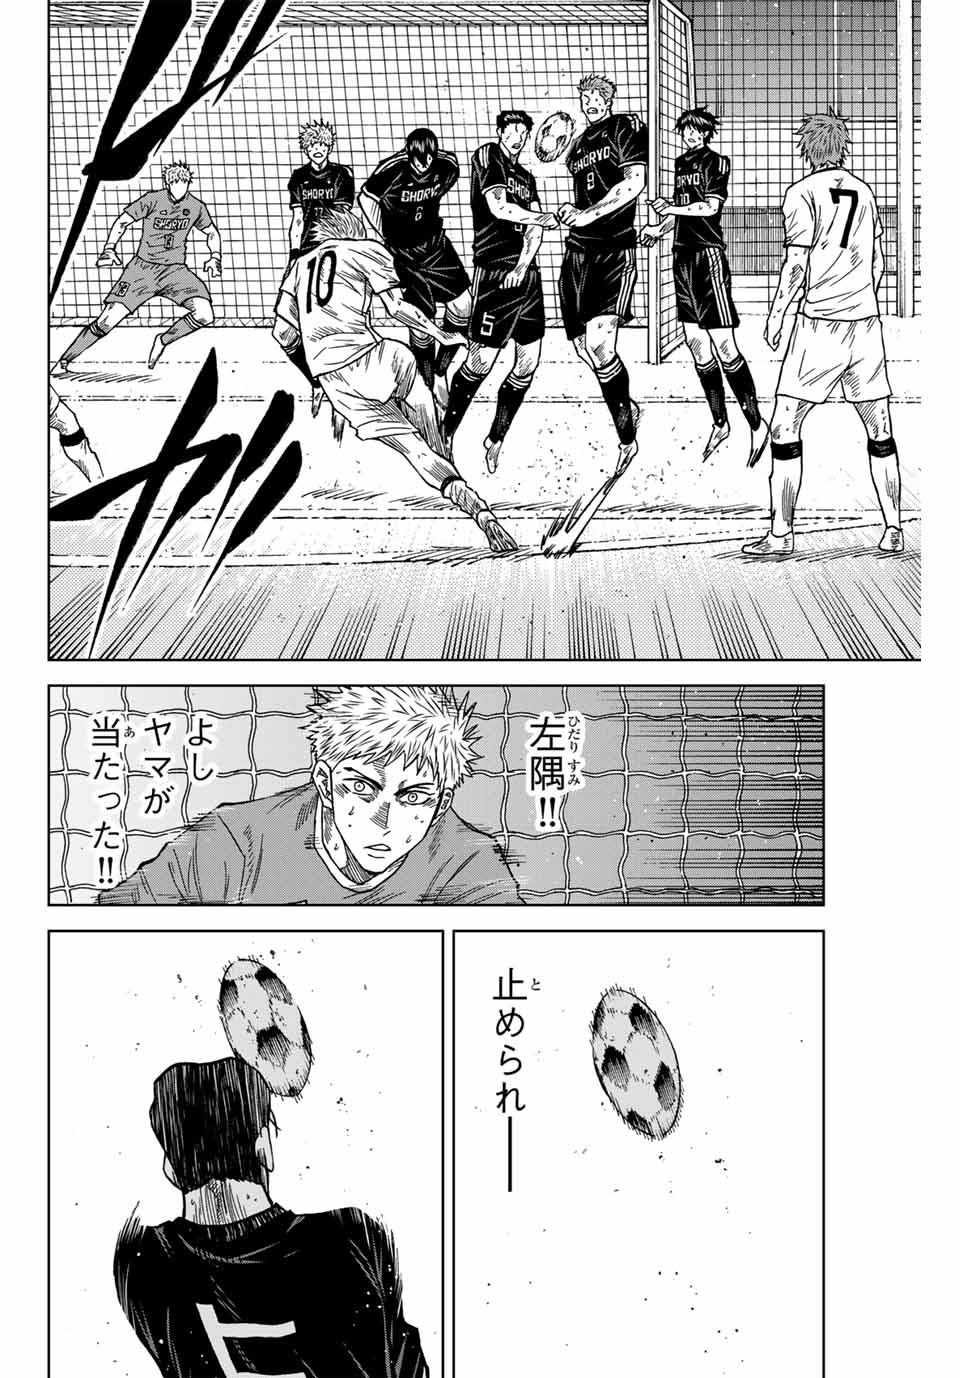 Aoku Somero - Chapter 99 - Page 6